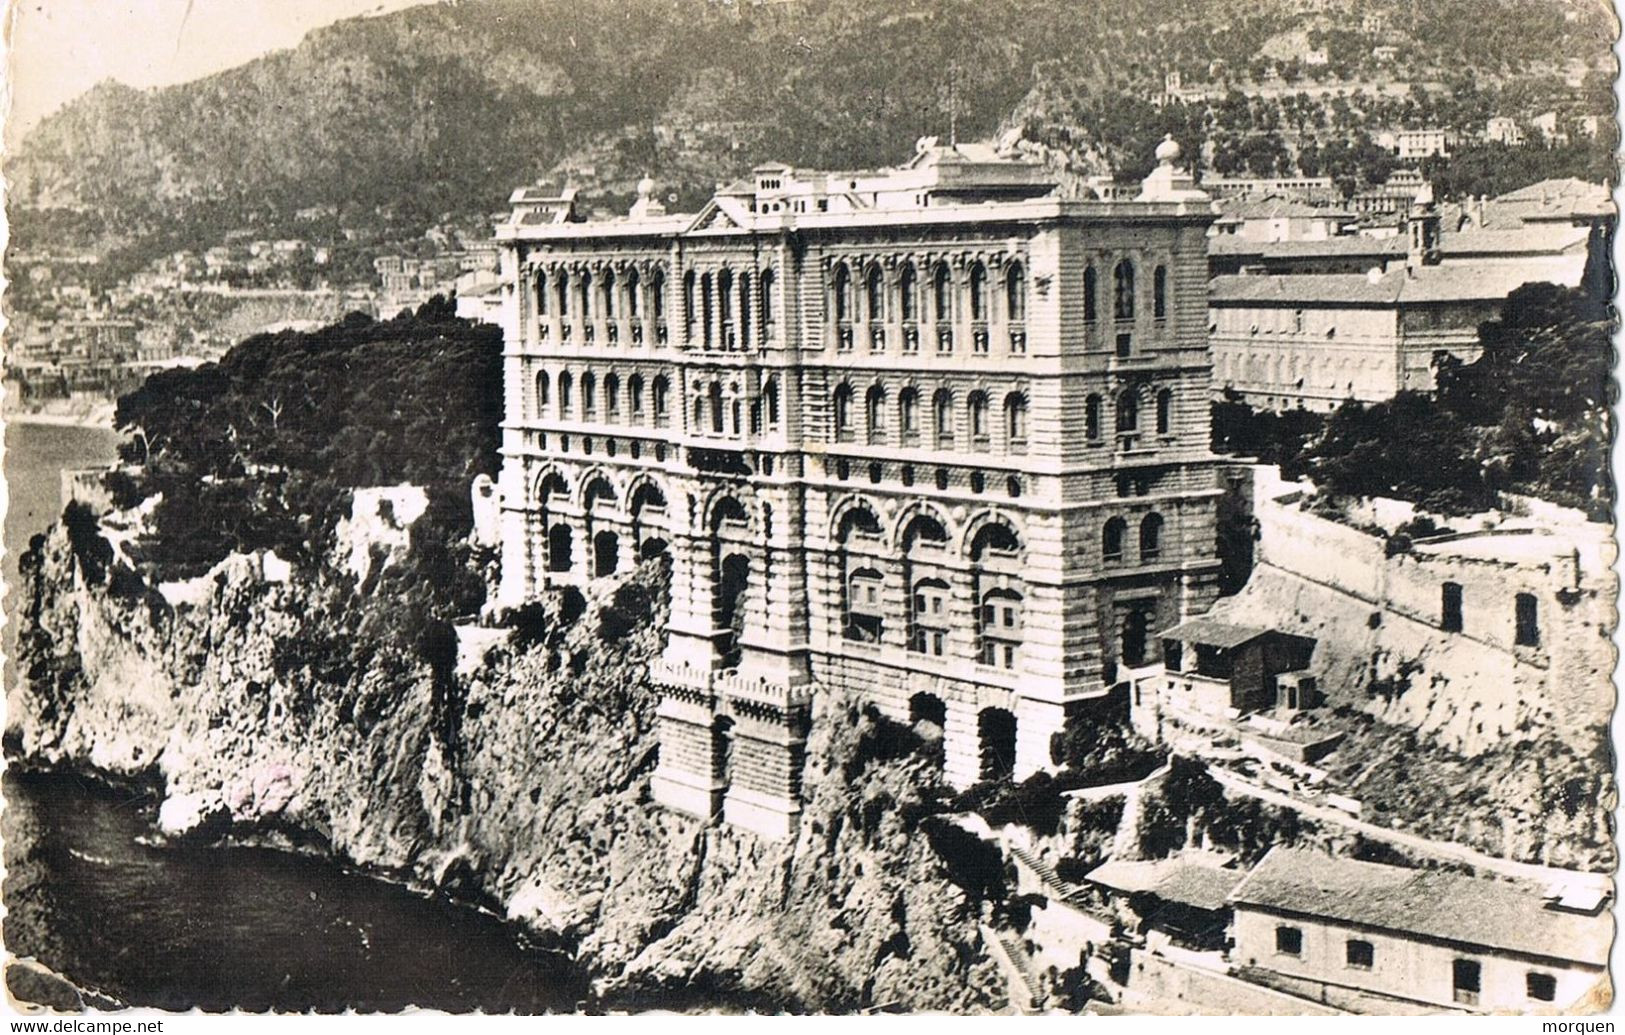 45423. Postal MONTECARLO (Monaco) 1972. Flamme Couronne Du Blason Mediterranee. Museo Oceanografico - Storia Postale